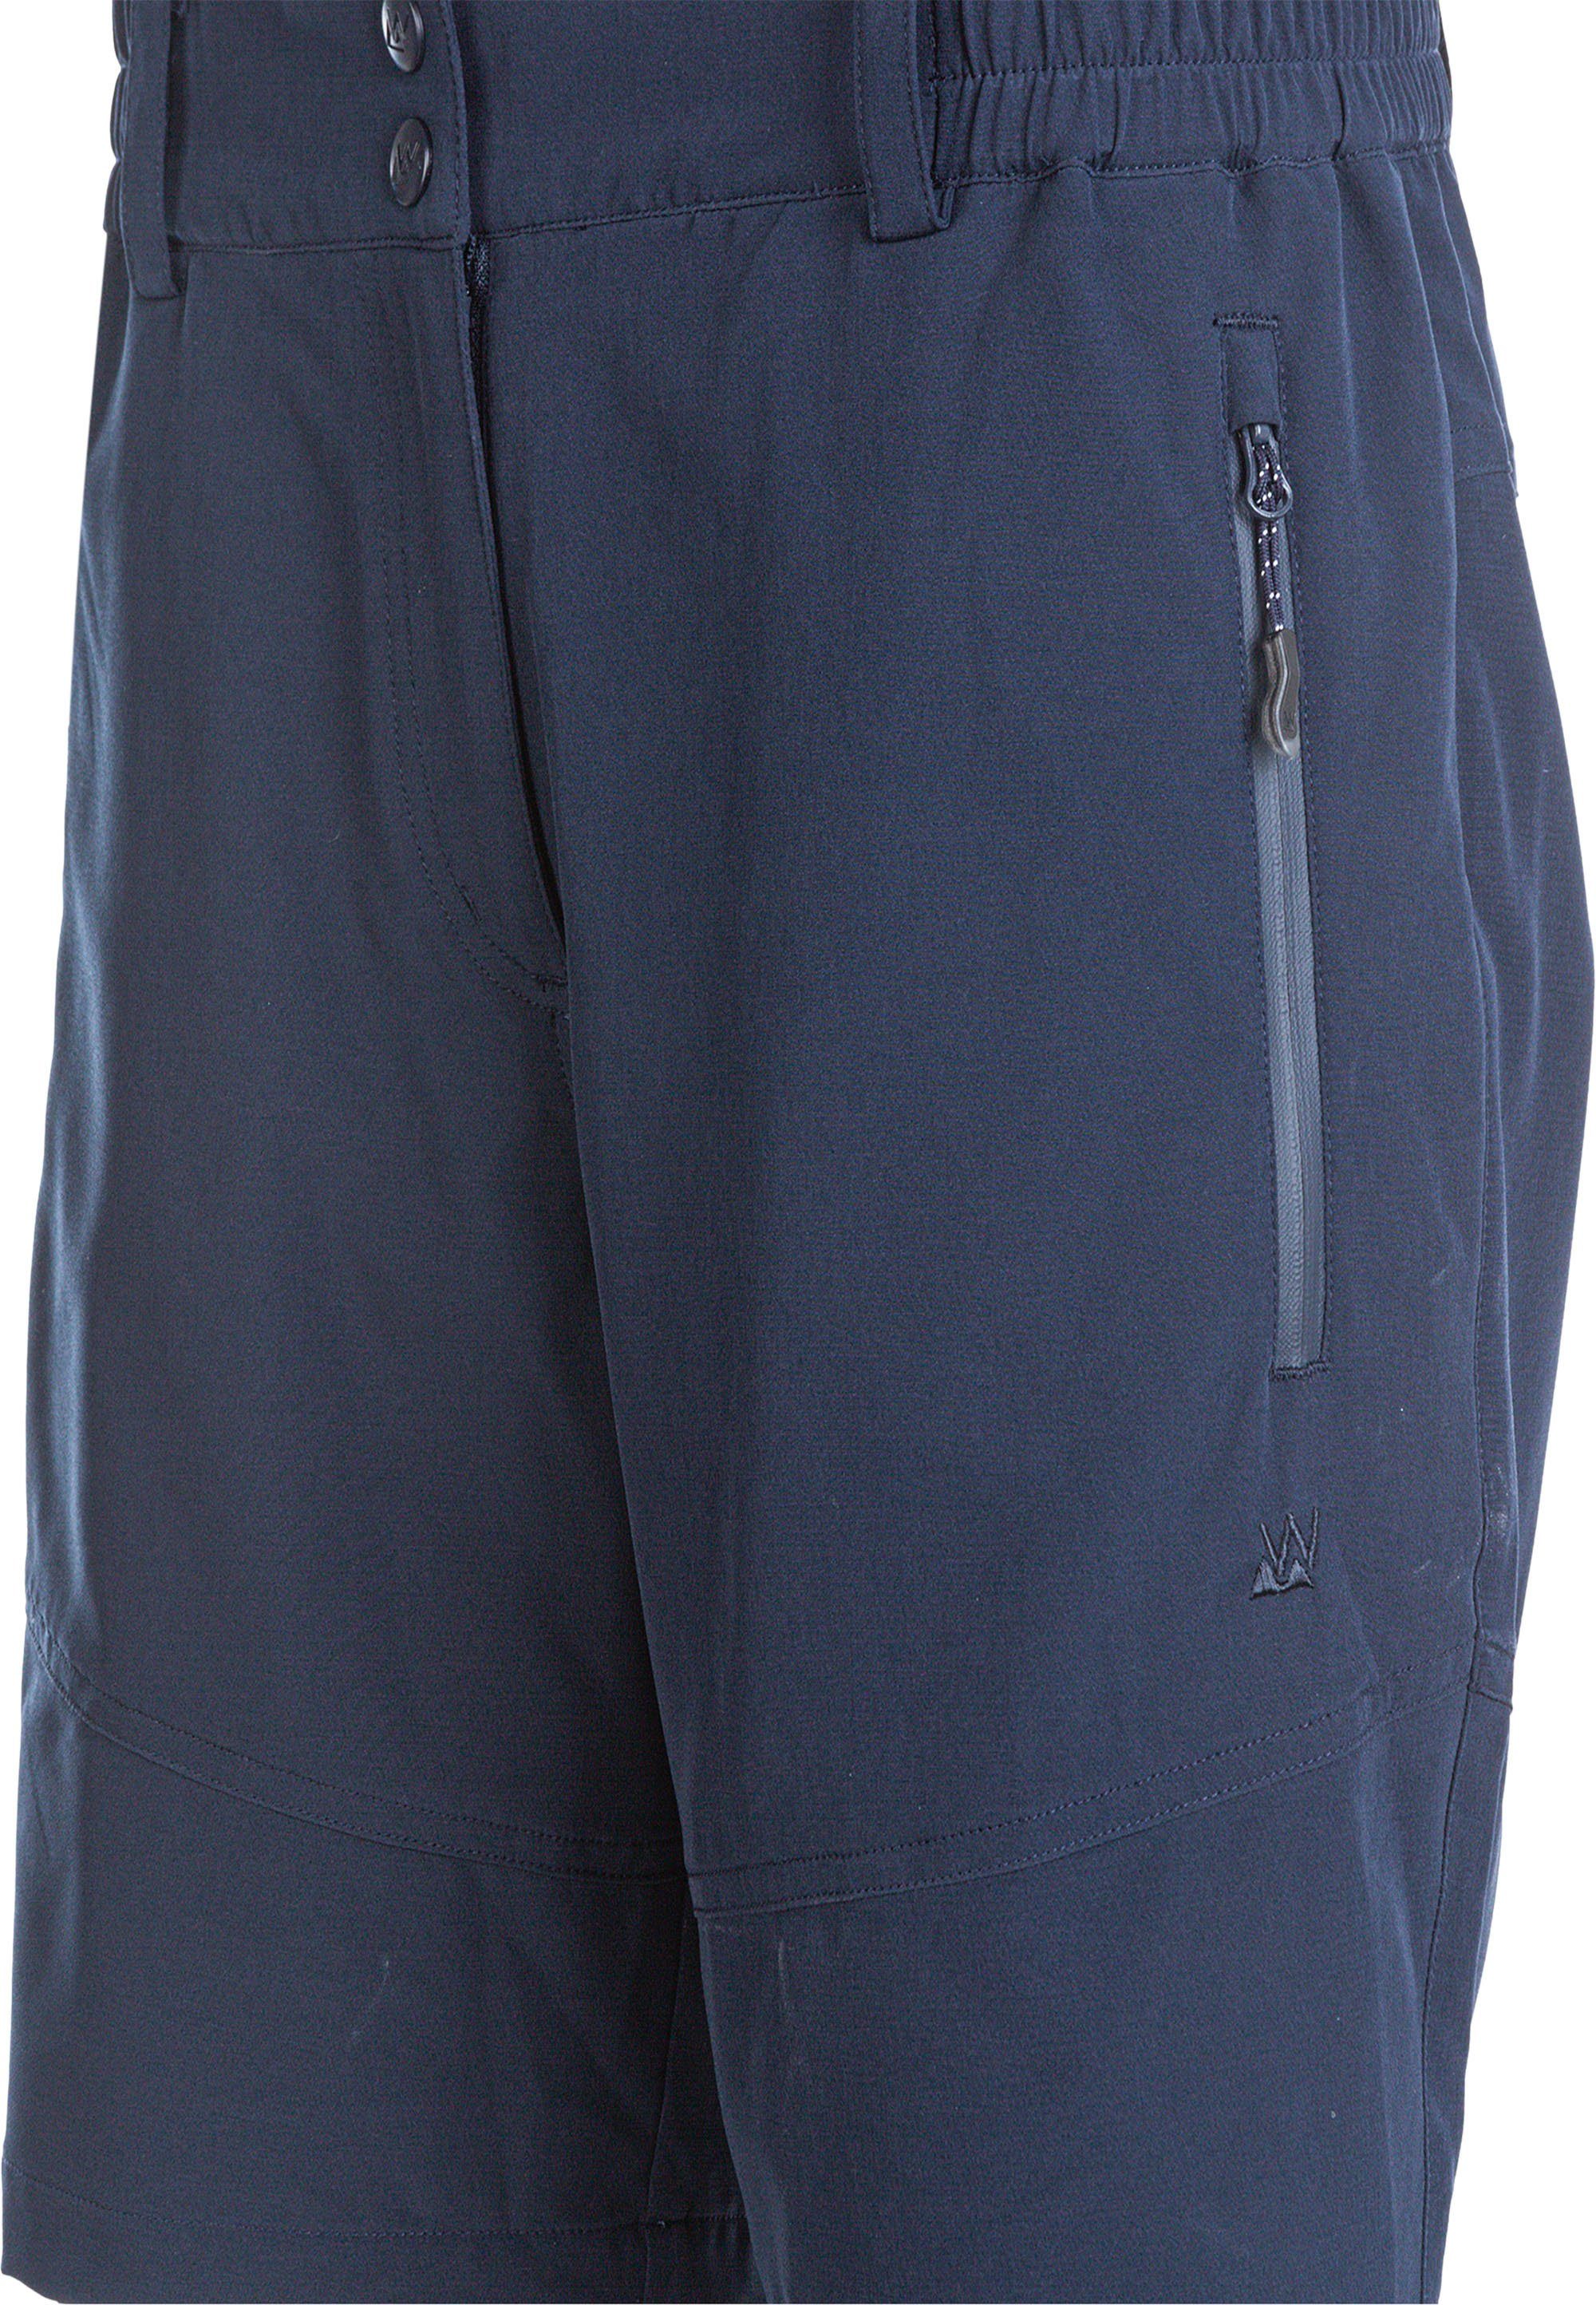 Funktionsstretch Shorts mit komfortablem LALA dunkelblau WHISTLER extra